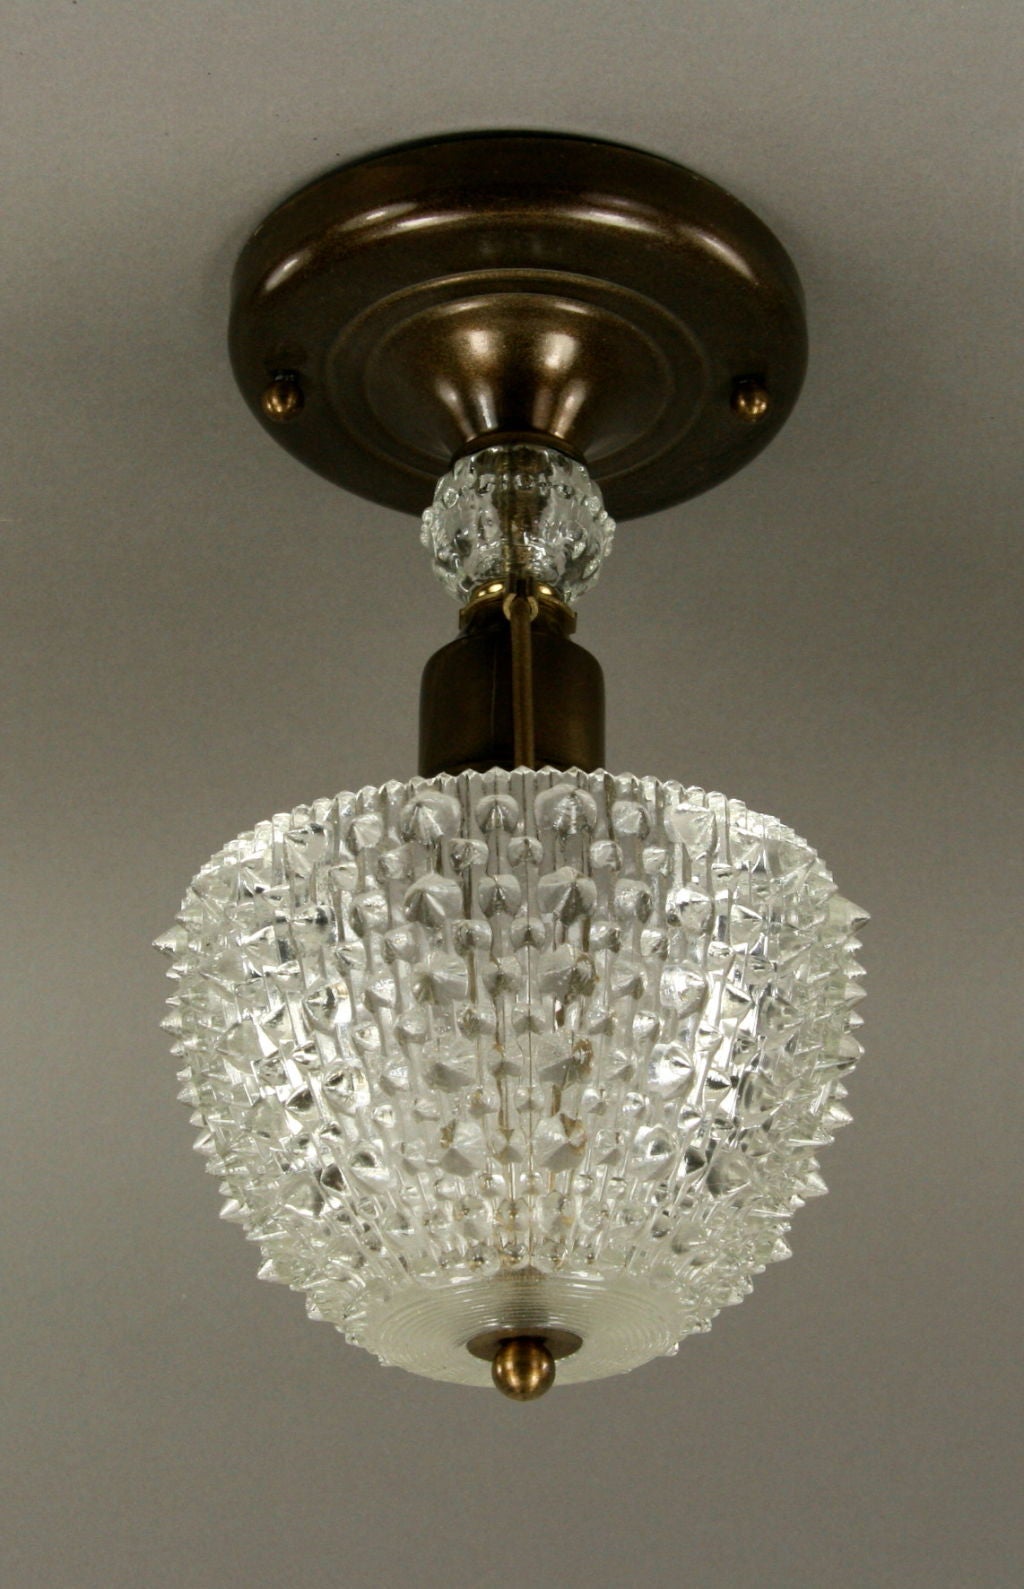 #1-2251, a dark brass and glass Italian flush mount fixture
Take one 75watt Edison based bulb.

